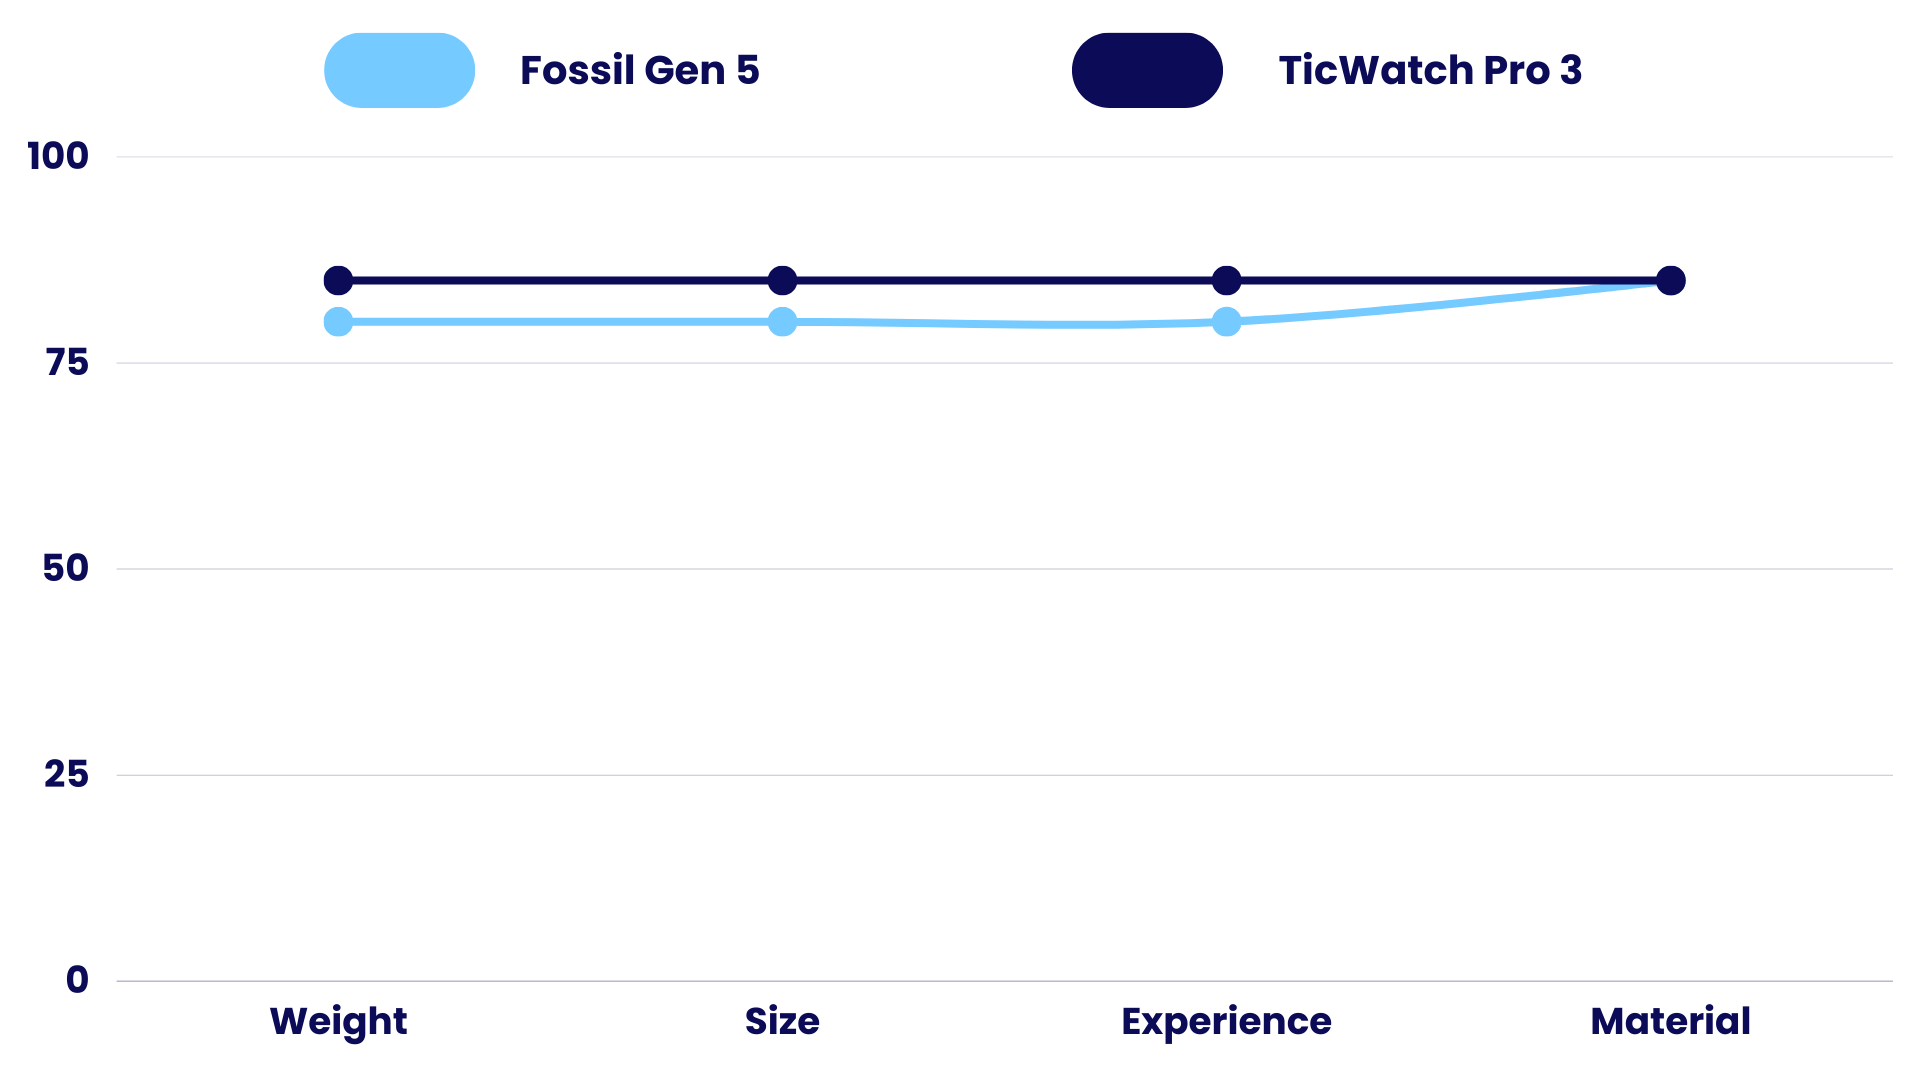 Body Comparison of Fossil Gen 5 vs TicWatch Pro 3